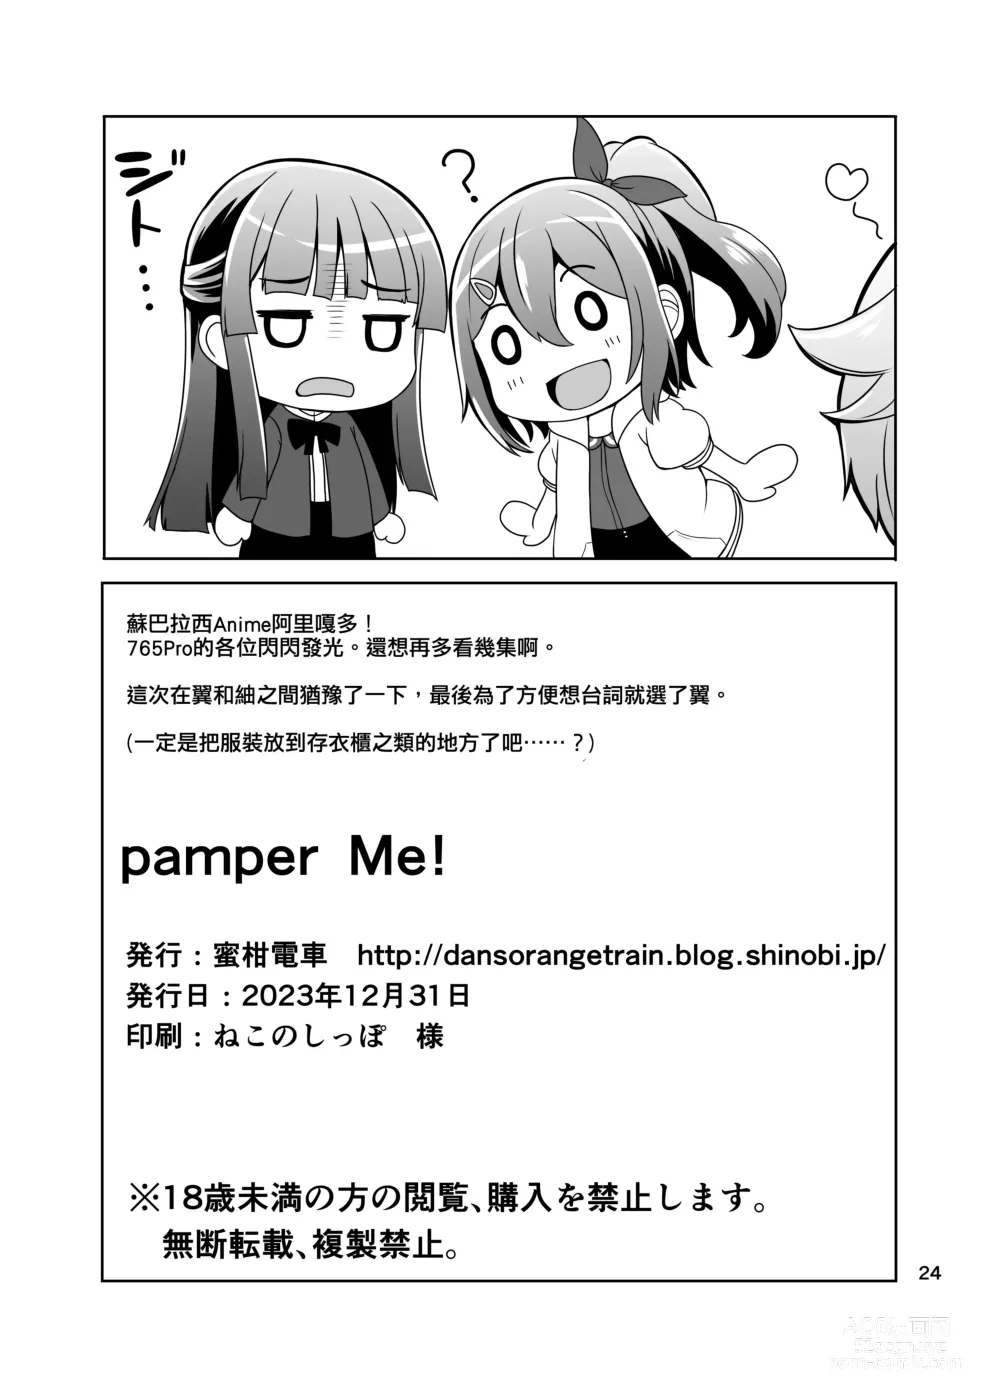 Page 26 of doujinshi pamper Me!